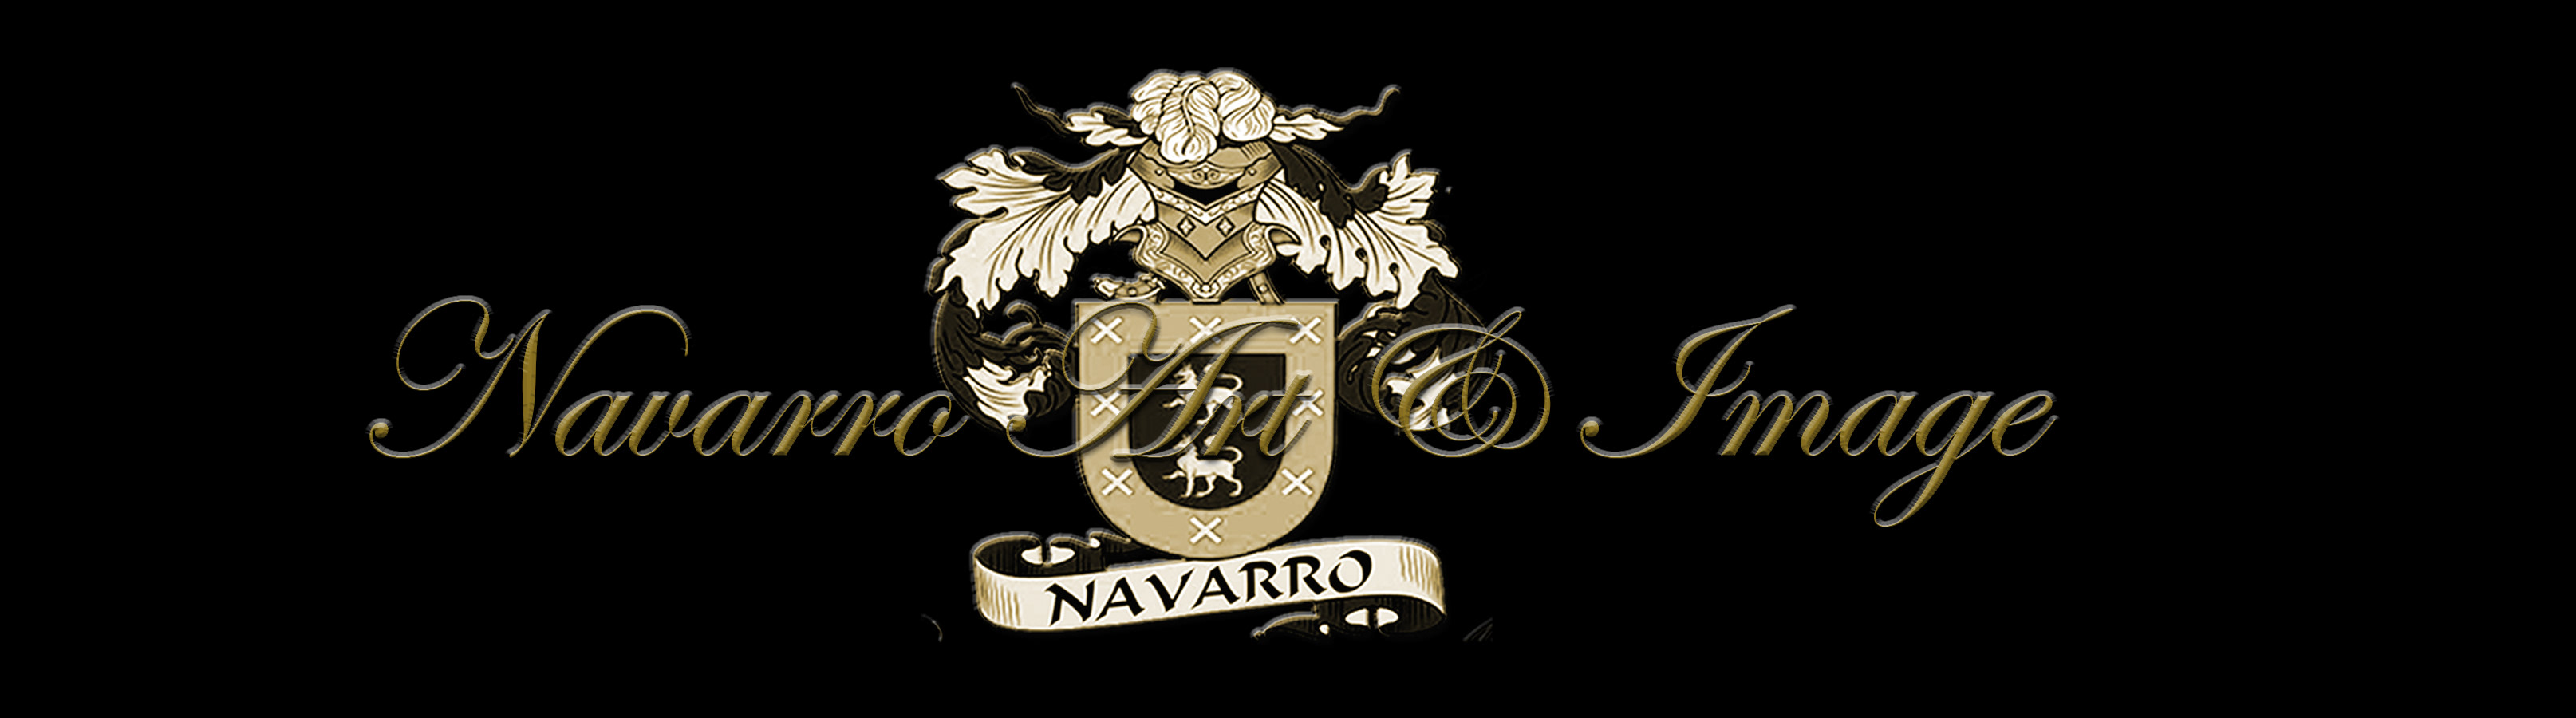 A.A. Navarro